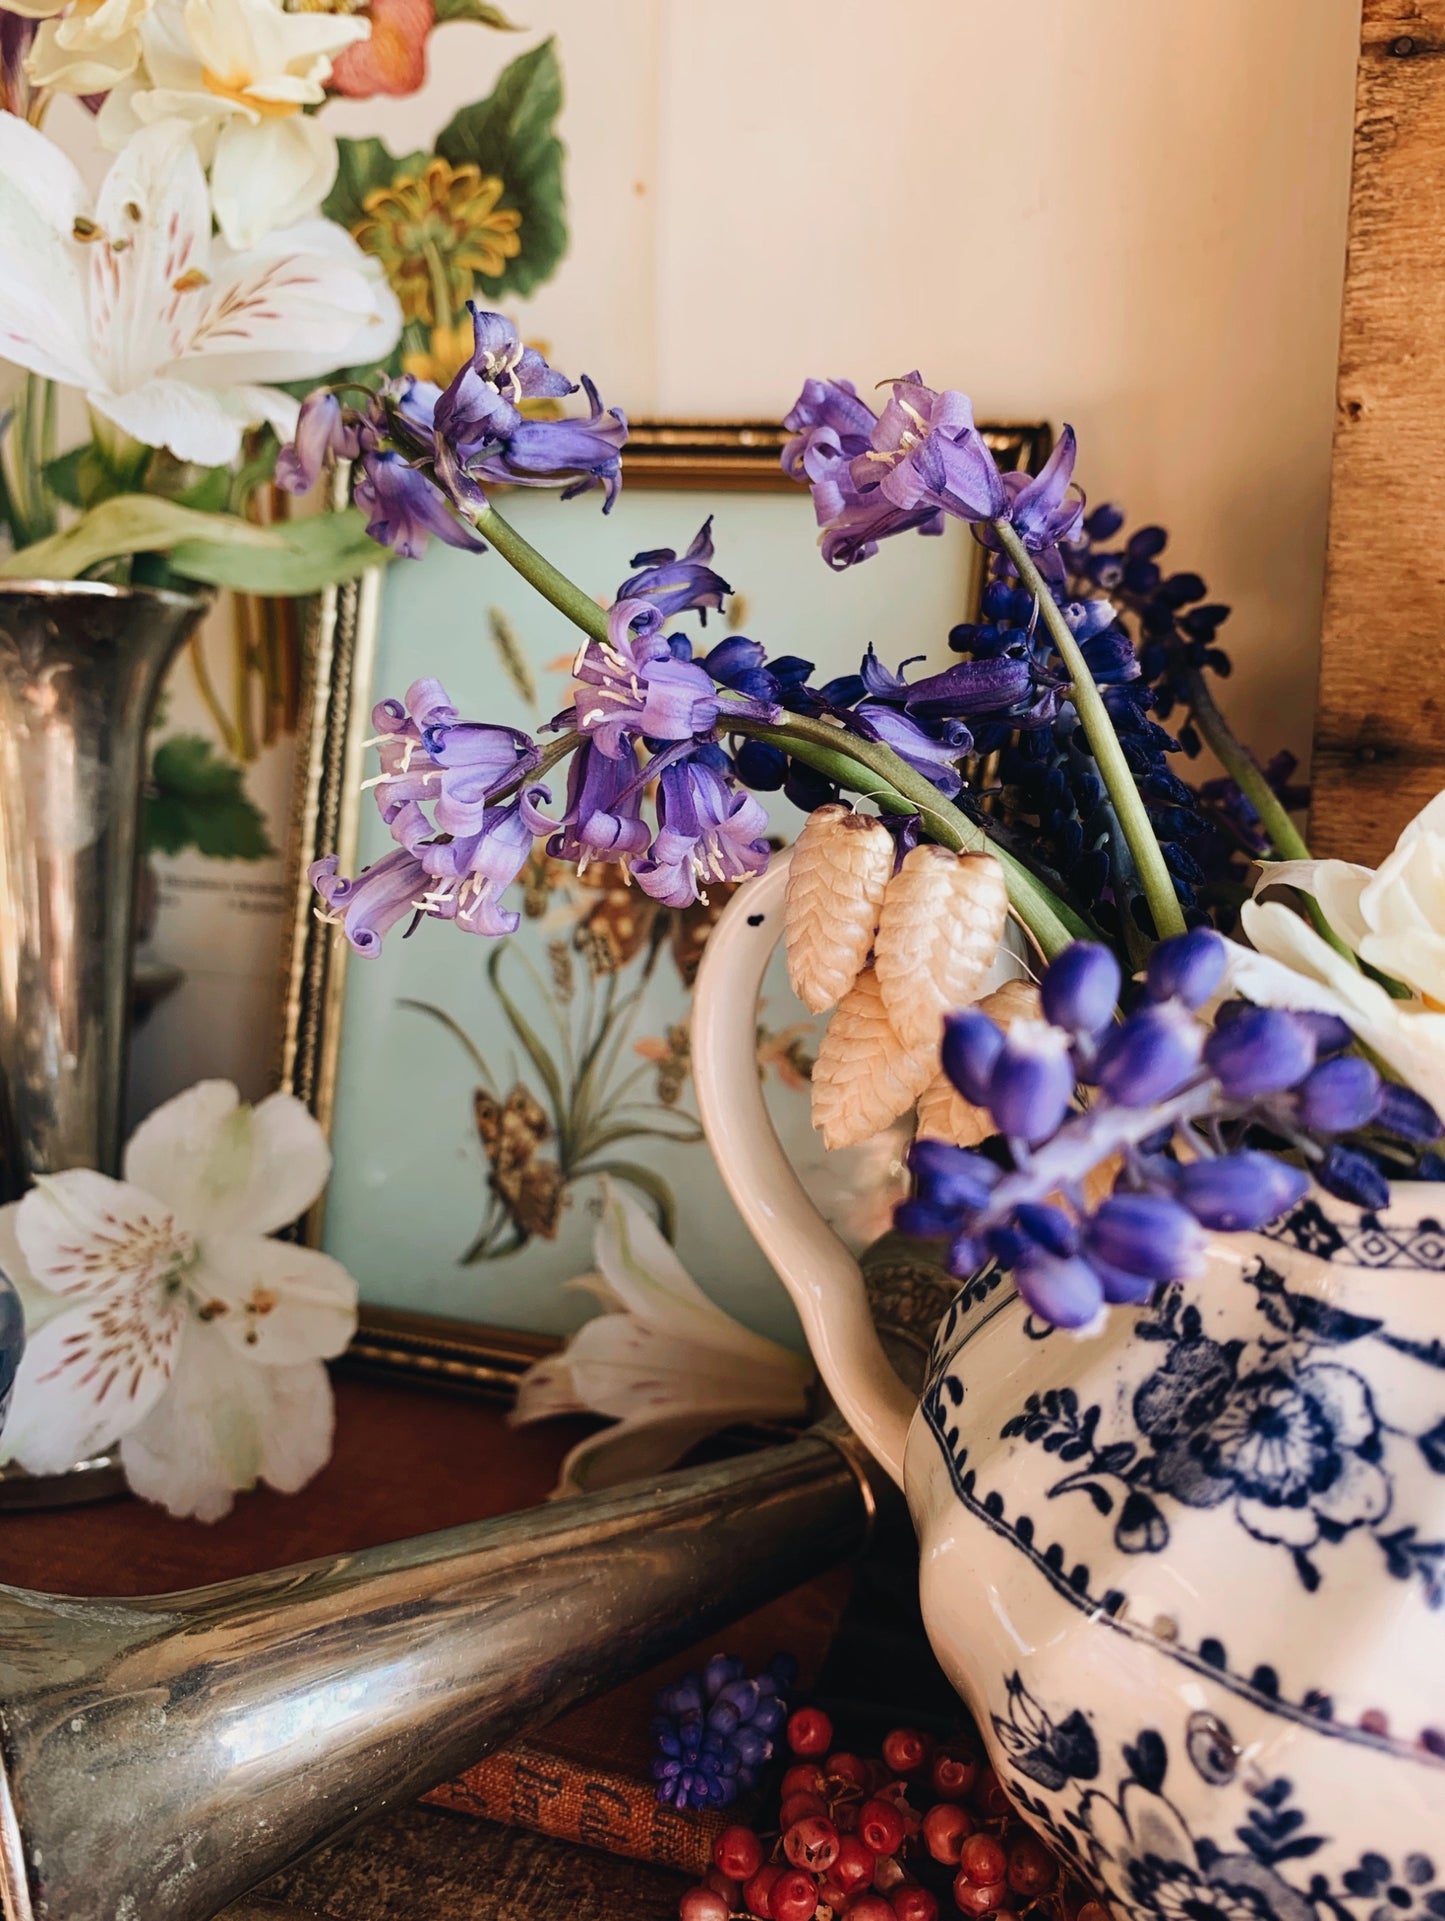 Vintage Floral Scalloped Blue and White Jug